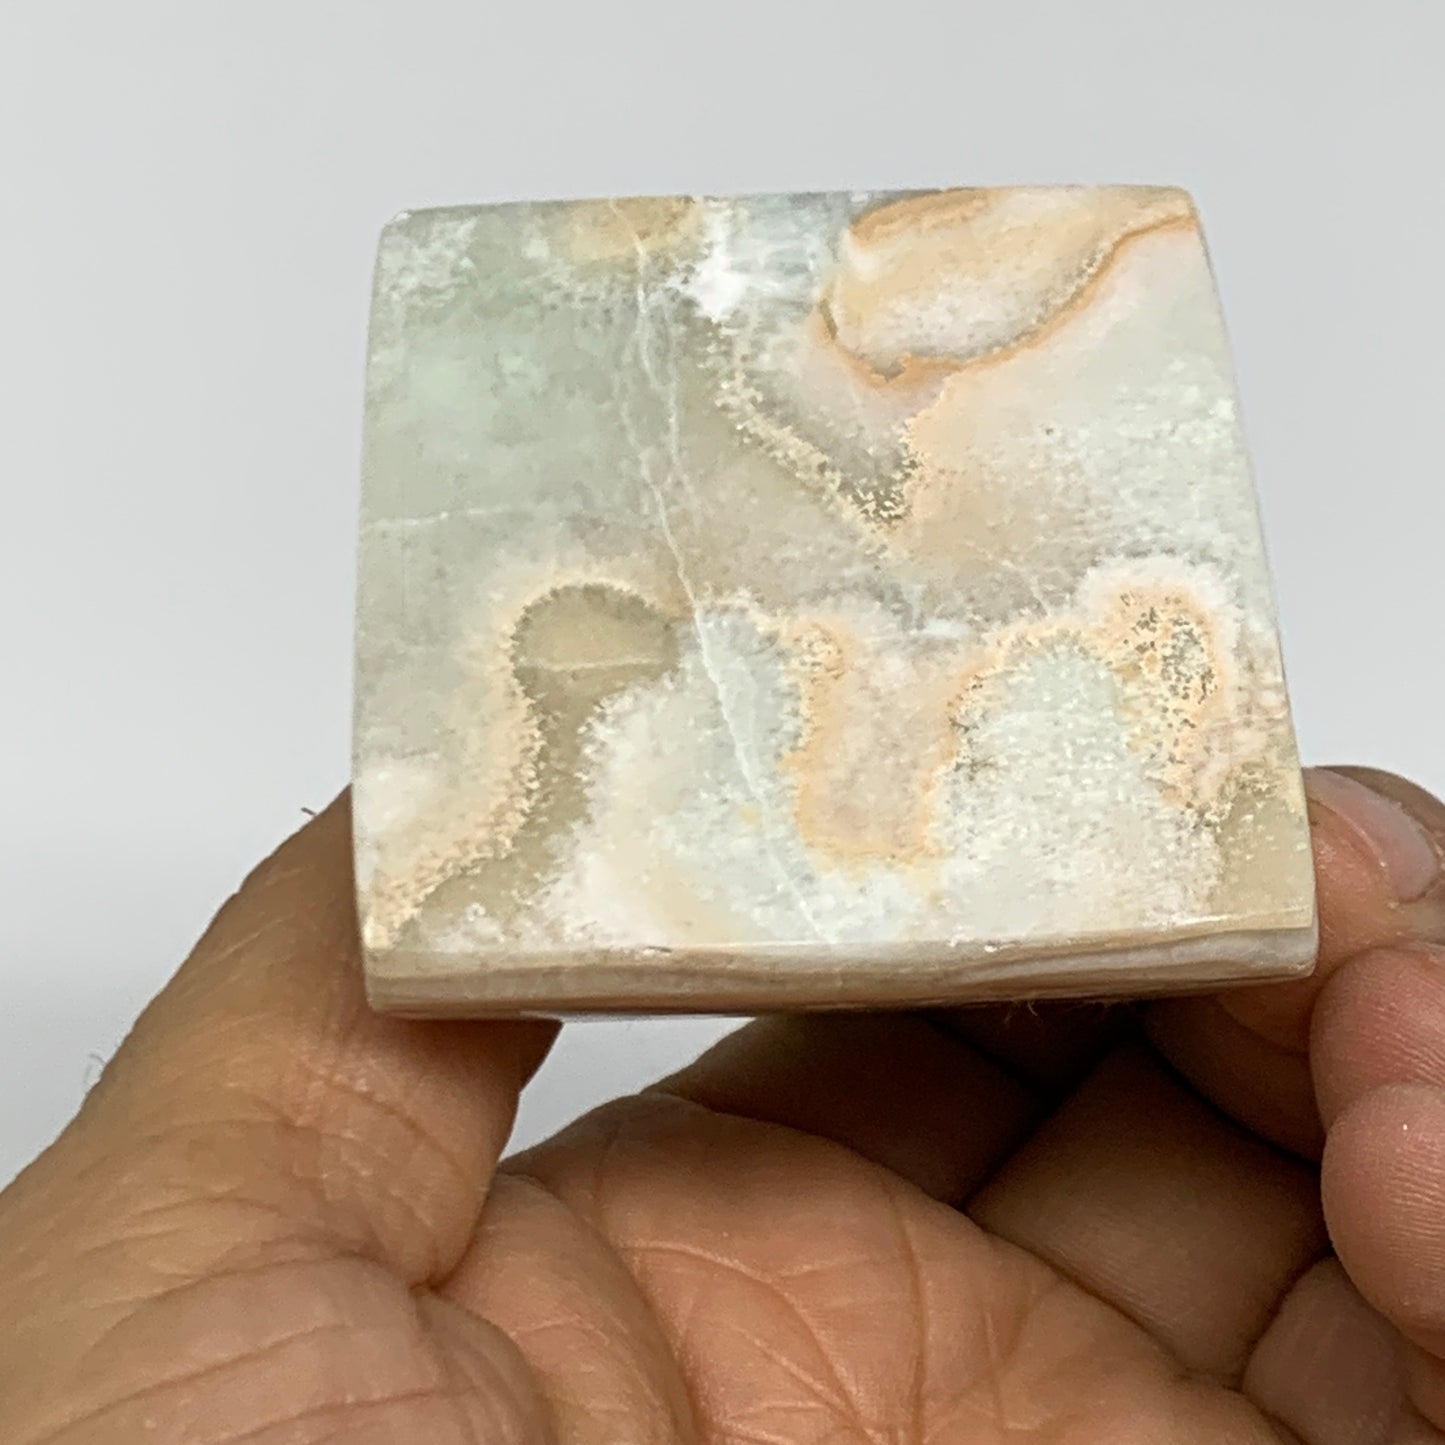 150.8g, 2.1"x1.9"x1.8", Caribbean Calcite Pyramid Gemstone, Crystal, B31791